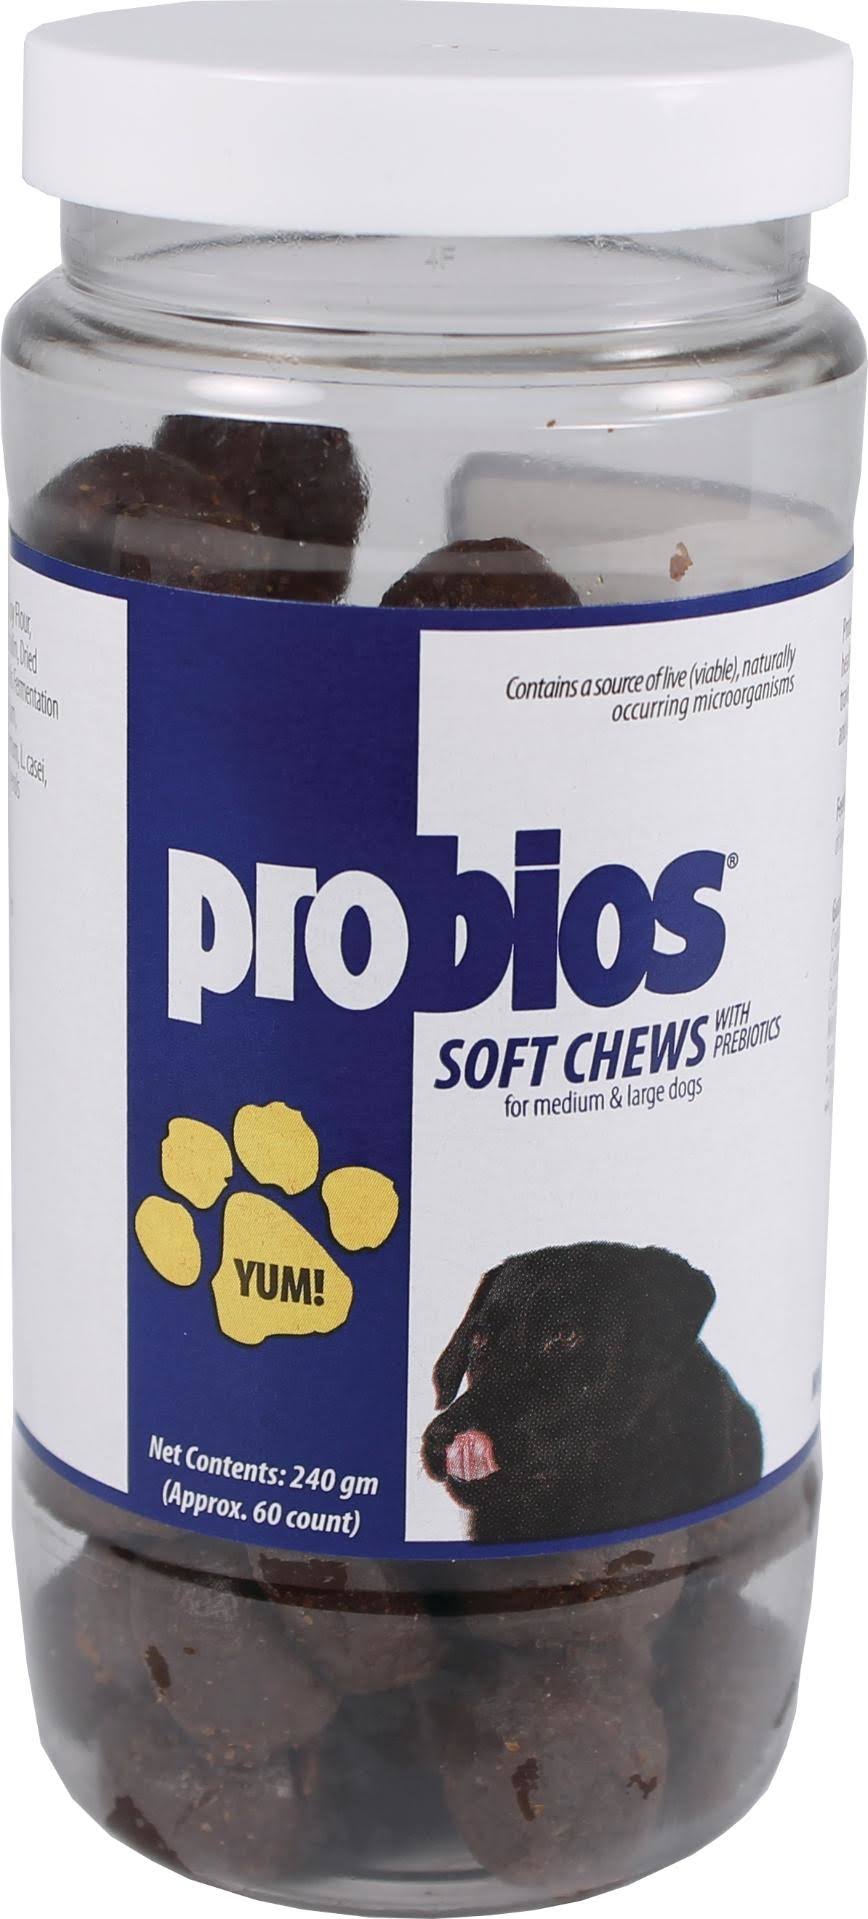 Probios Soft Chews Dog Treat - 120gm, 120 Count